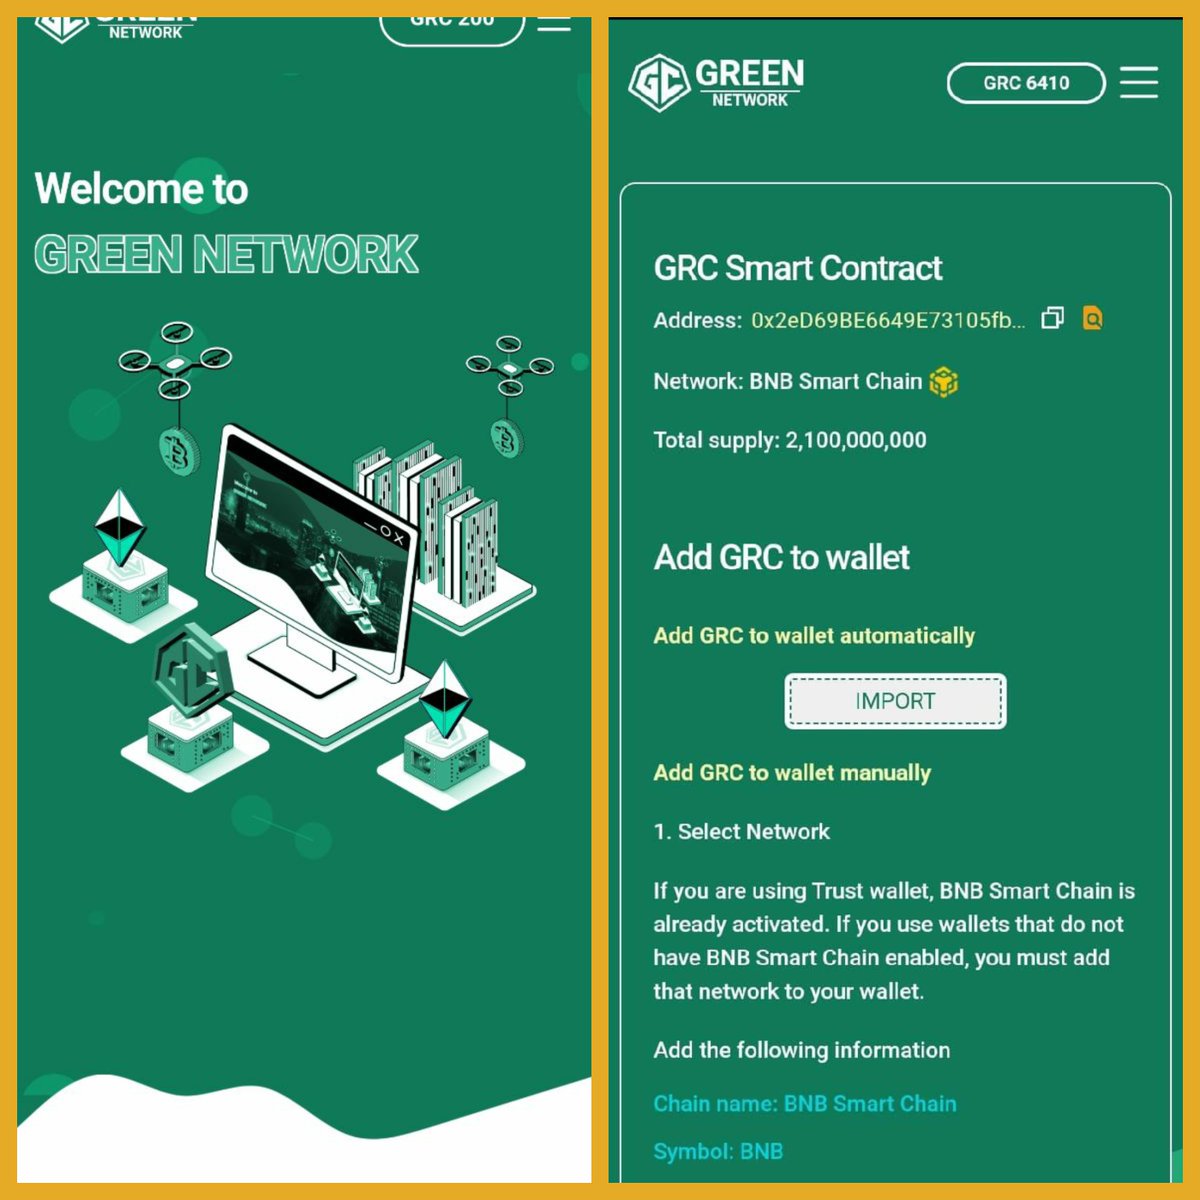 #GreenNetwork  New Project 💥💥
✅GRC Smart Contract :
0x2eD69BE6649E73105fbd55466164bB4Da77EDB4F
✅Network: BNB Smart Chain 
✅Total supply: 2,100,000,000
✅List token on Coinmartketcap, Coingecko
✅List token on DEX, CEX
✅Release Green Network Beta 2.0 version
✅Provide node…